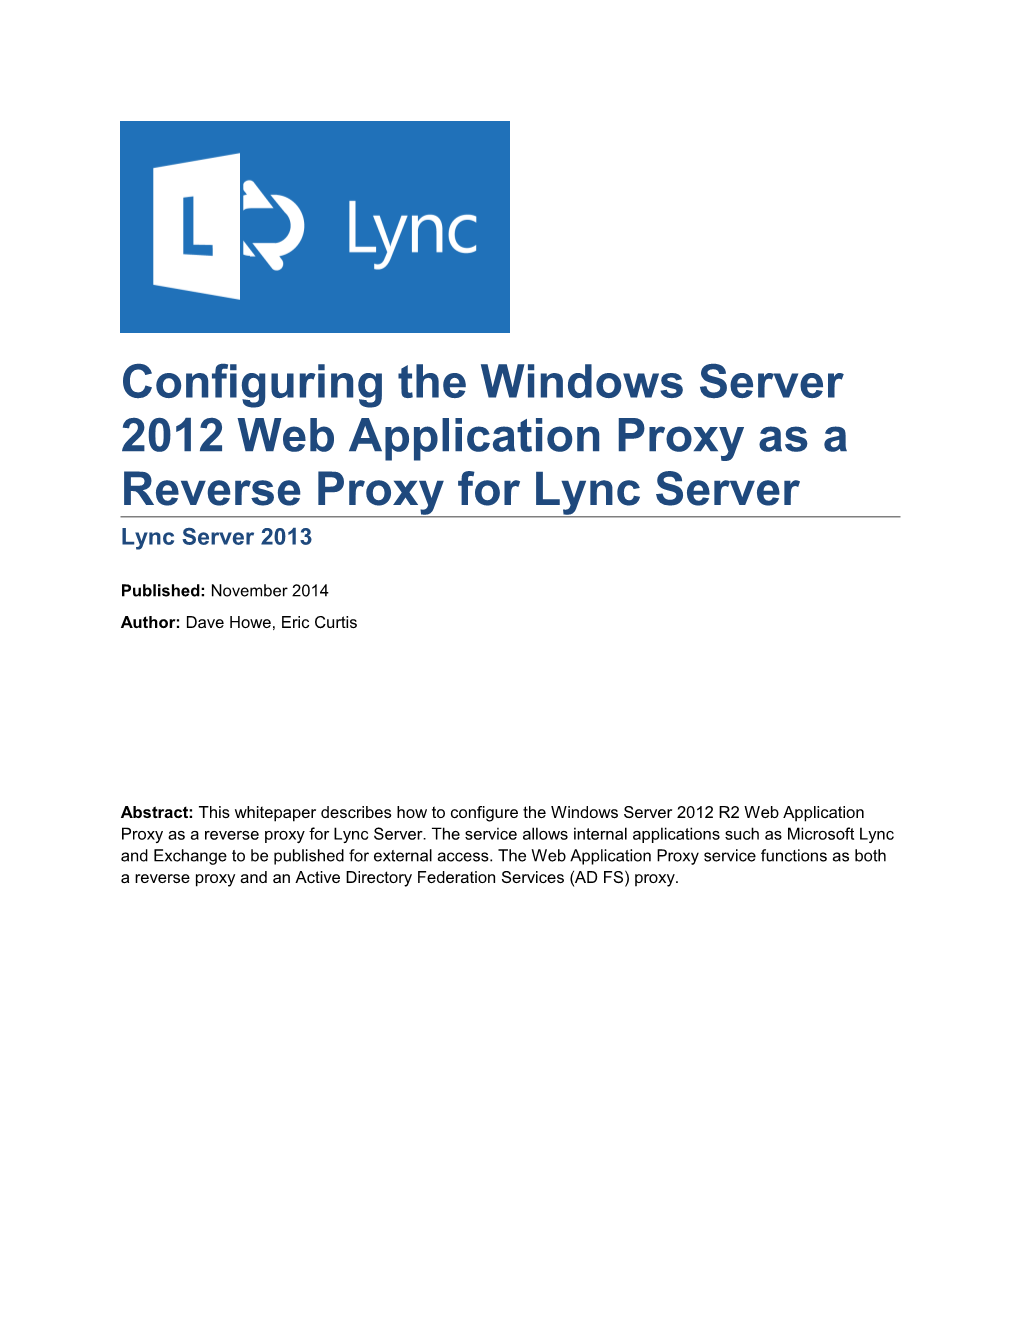 Configuring the Windows Server 2012 Web Application Proxy As a Reverse Proxy for Lync Server